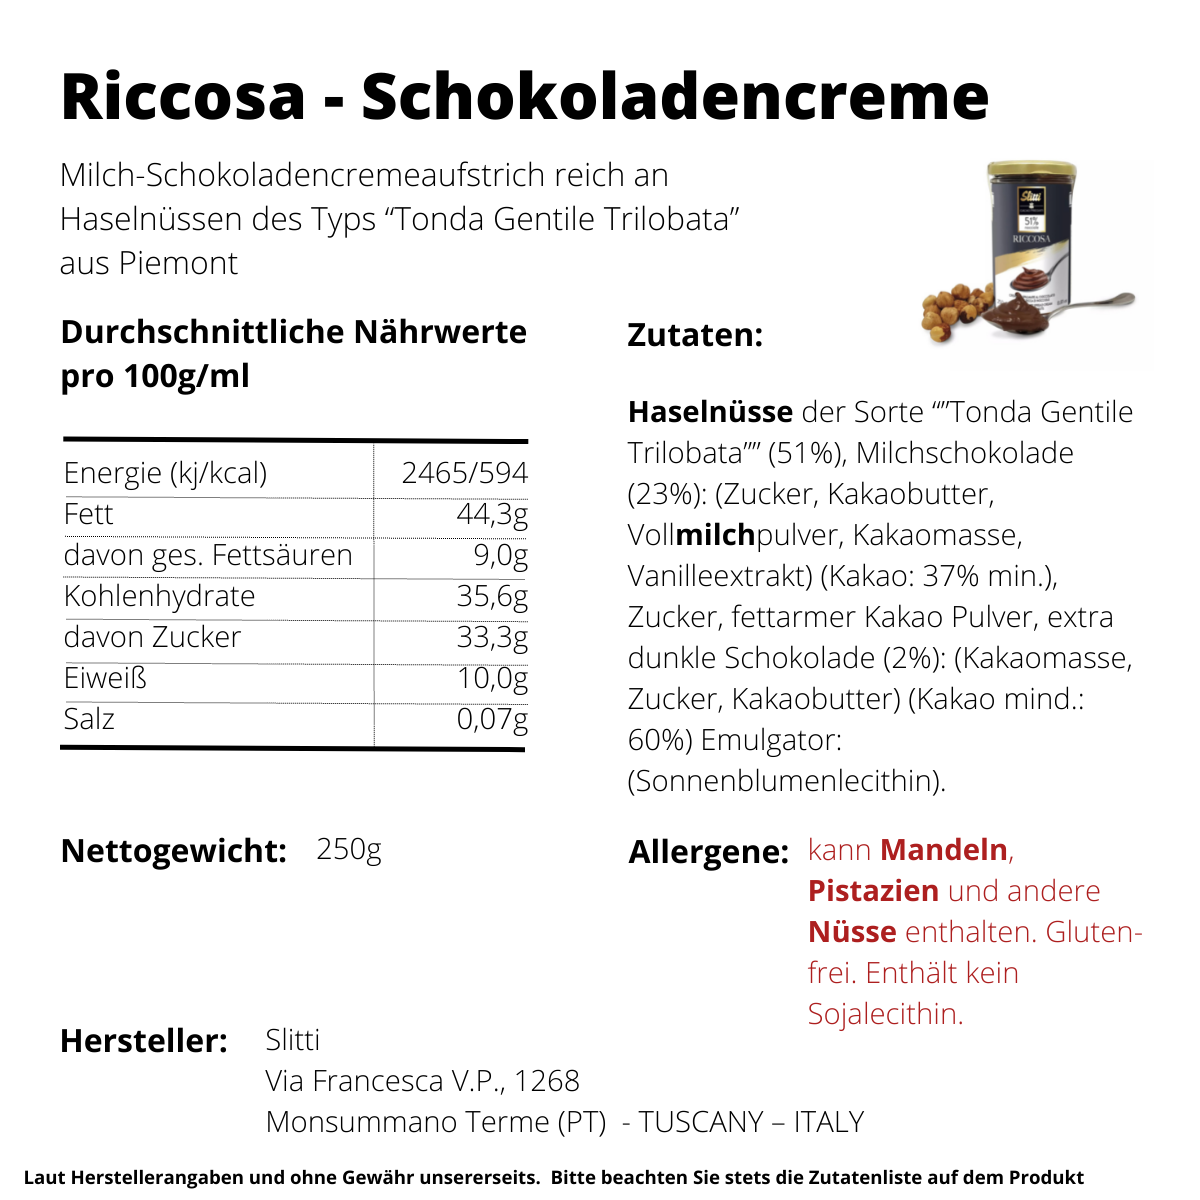 Slitti Riccosa - Mehrfach preisgekrönte Haselnuss-Schokocreme 250g